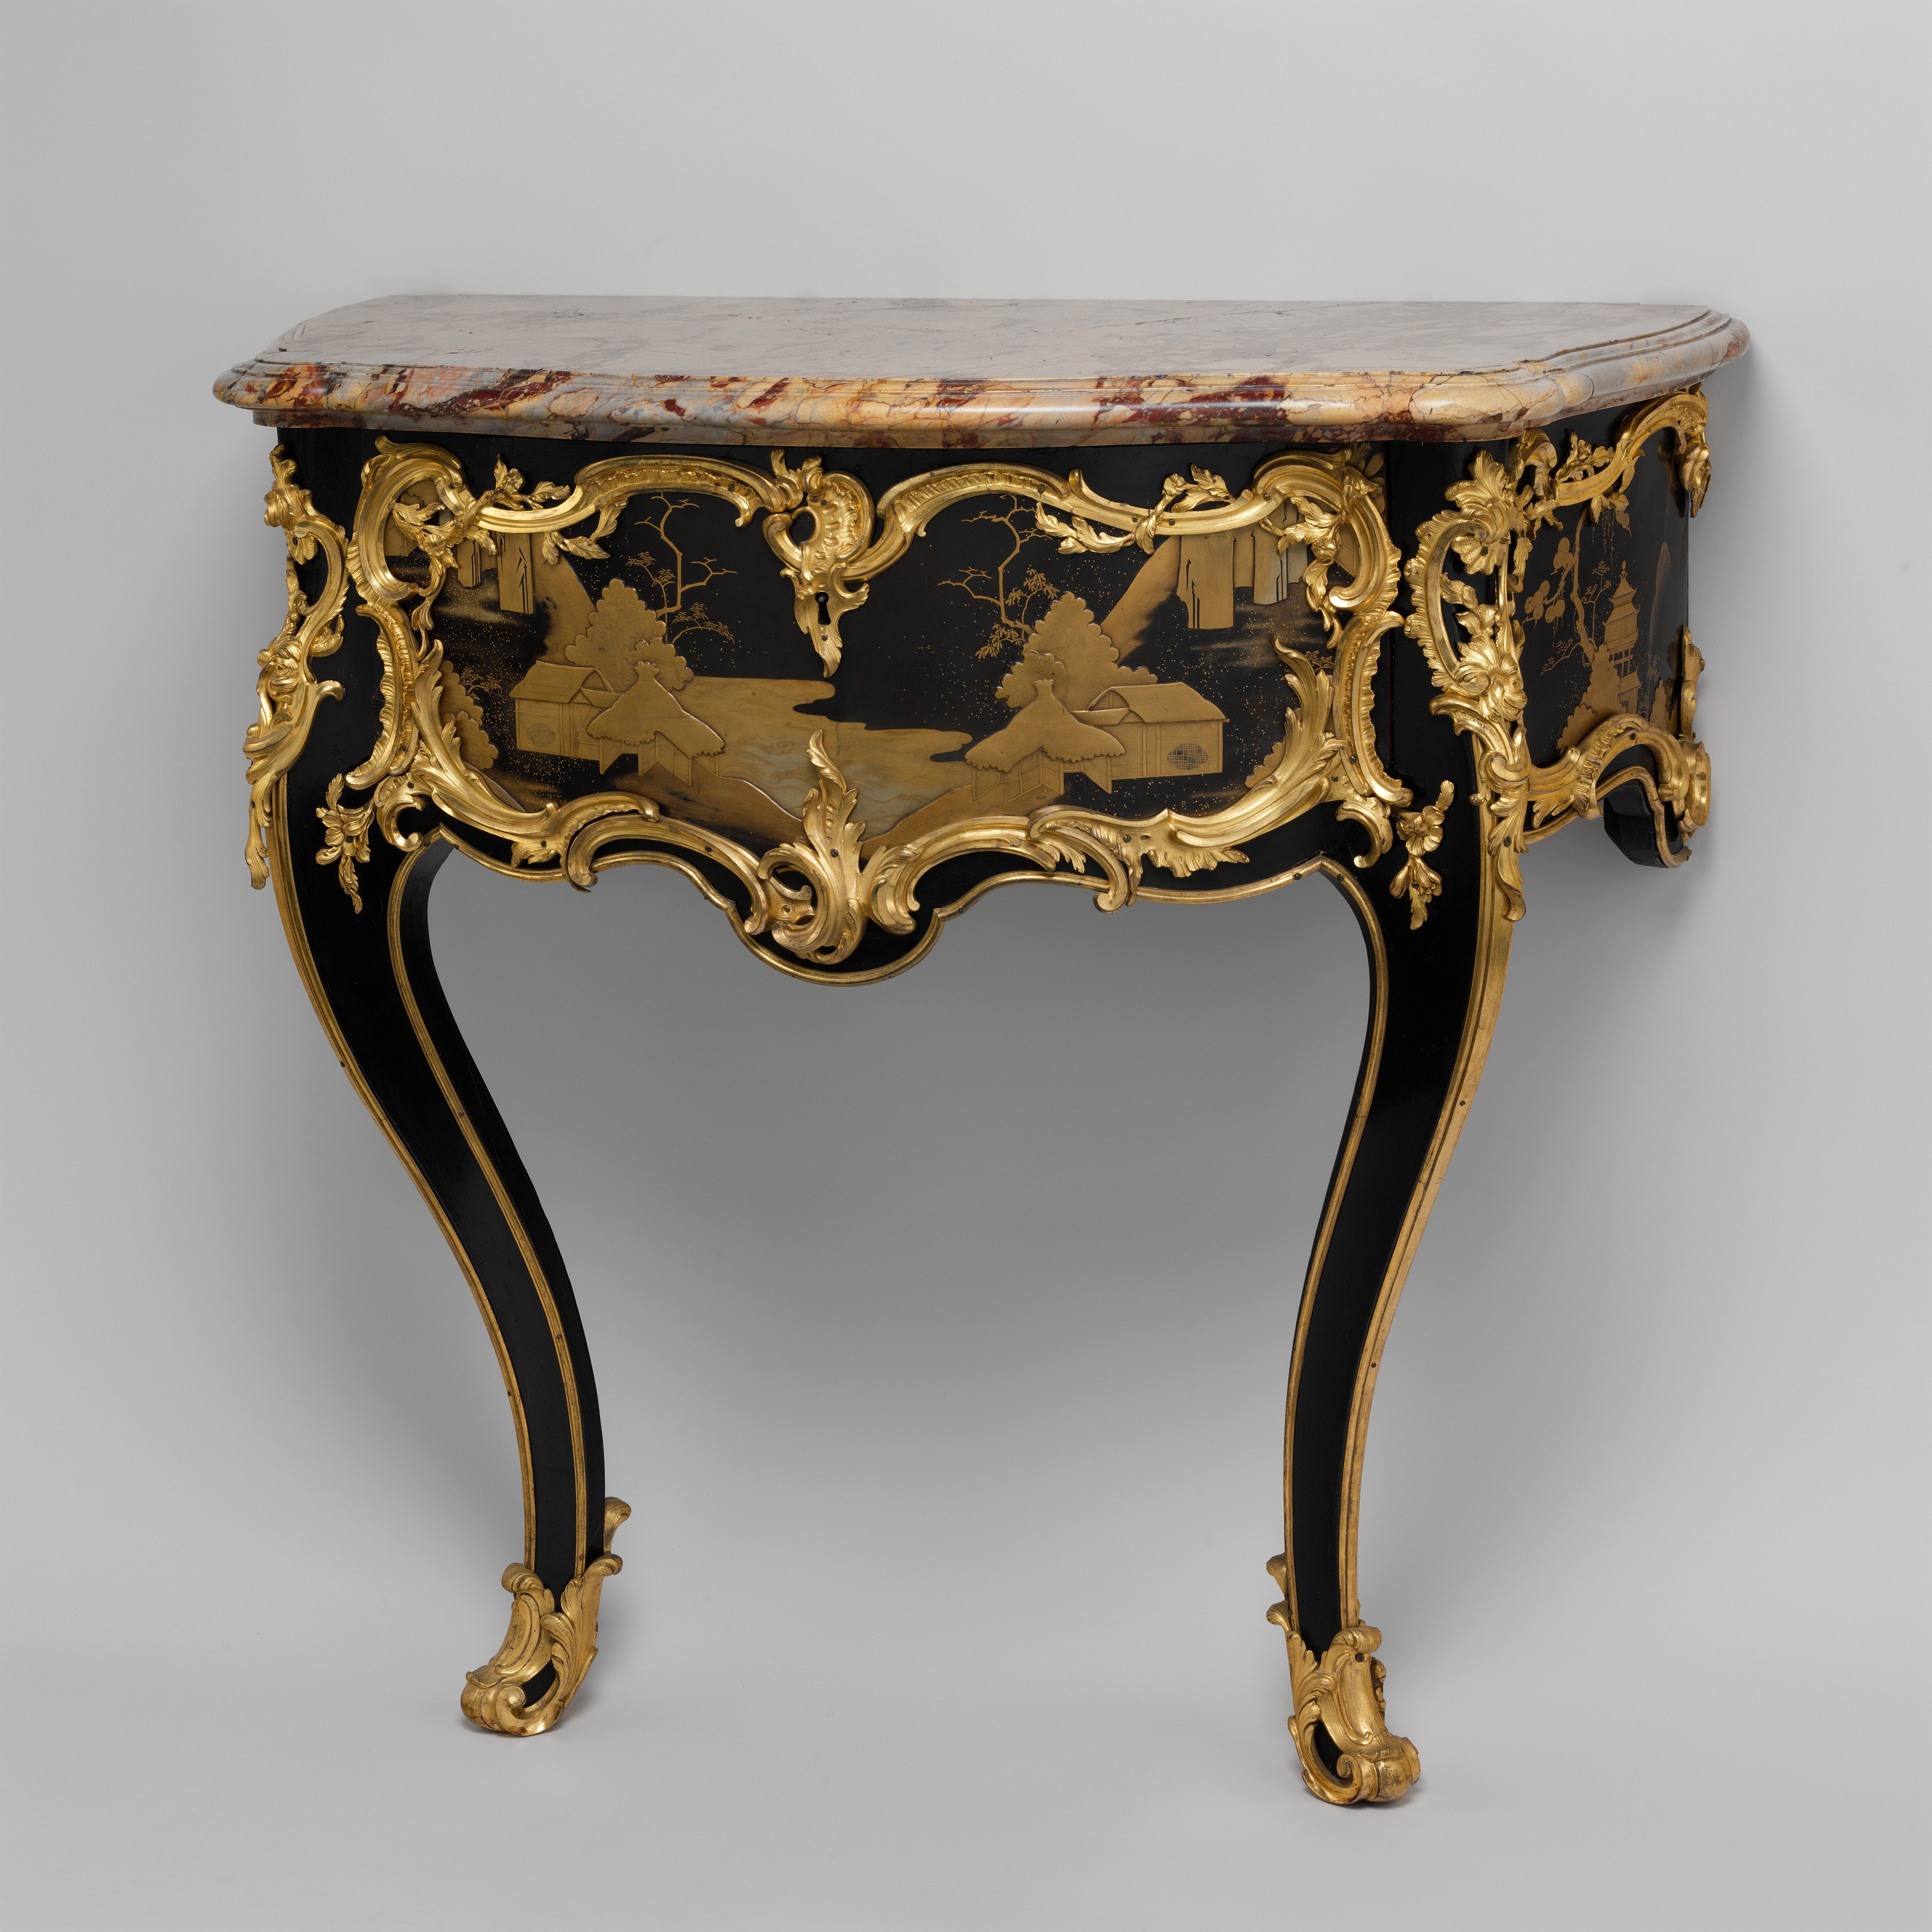 of Metropolitan | | en French, (commode Side Art console) Museum van Bernard table II | Risenburgh Paris The